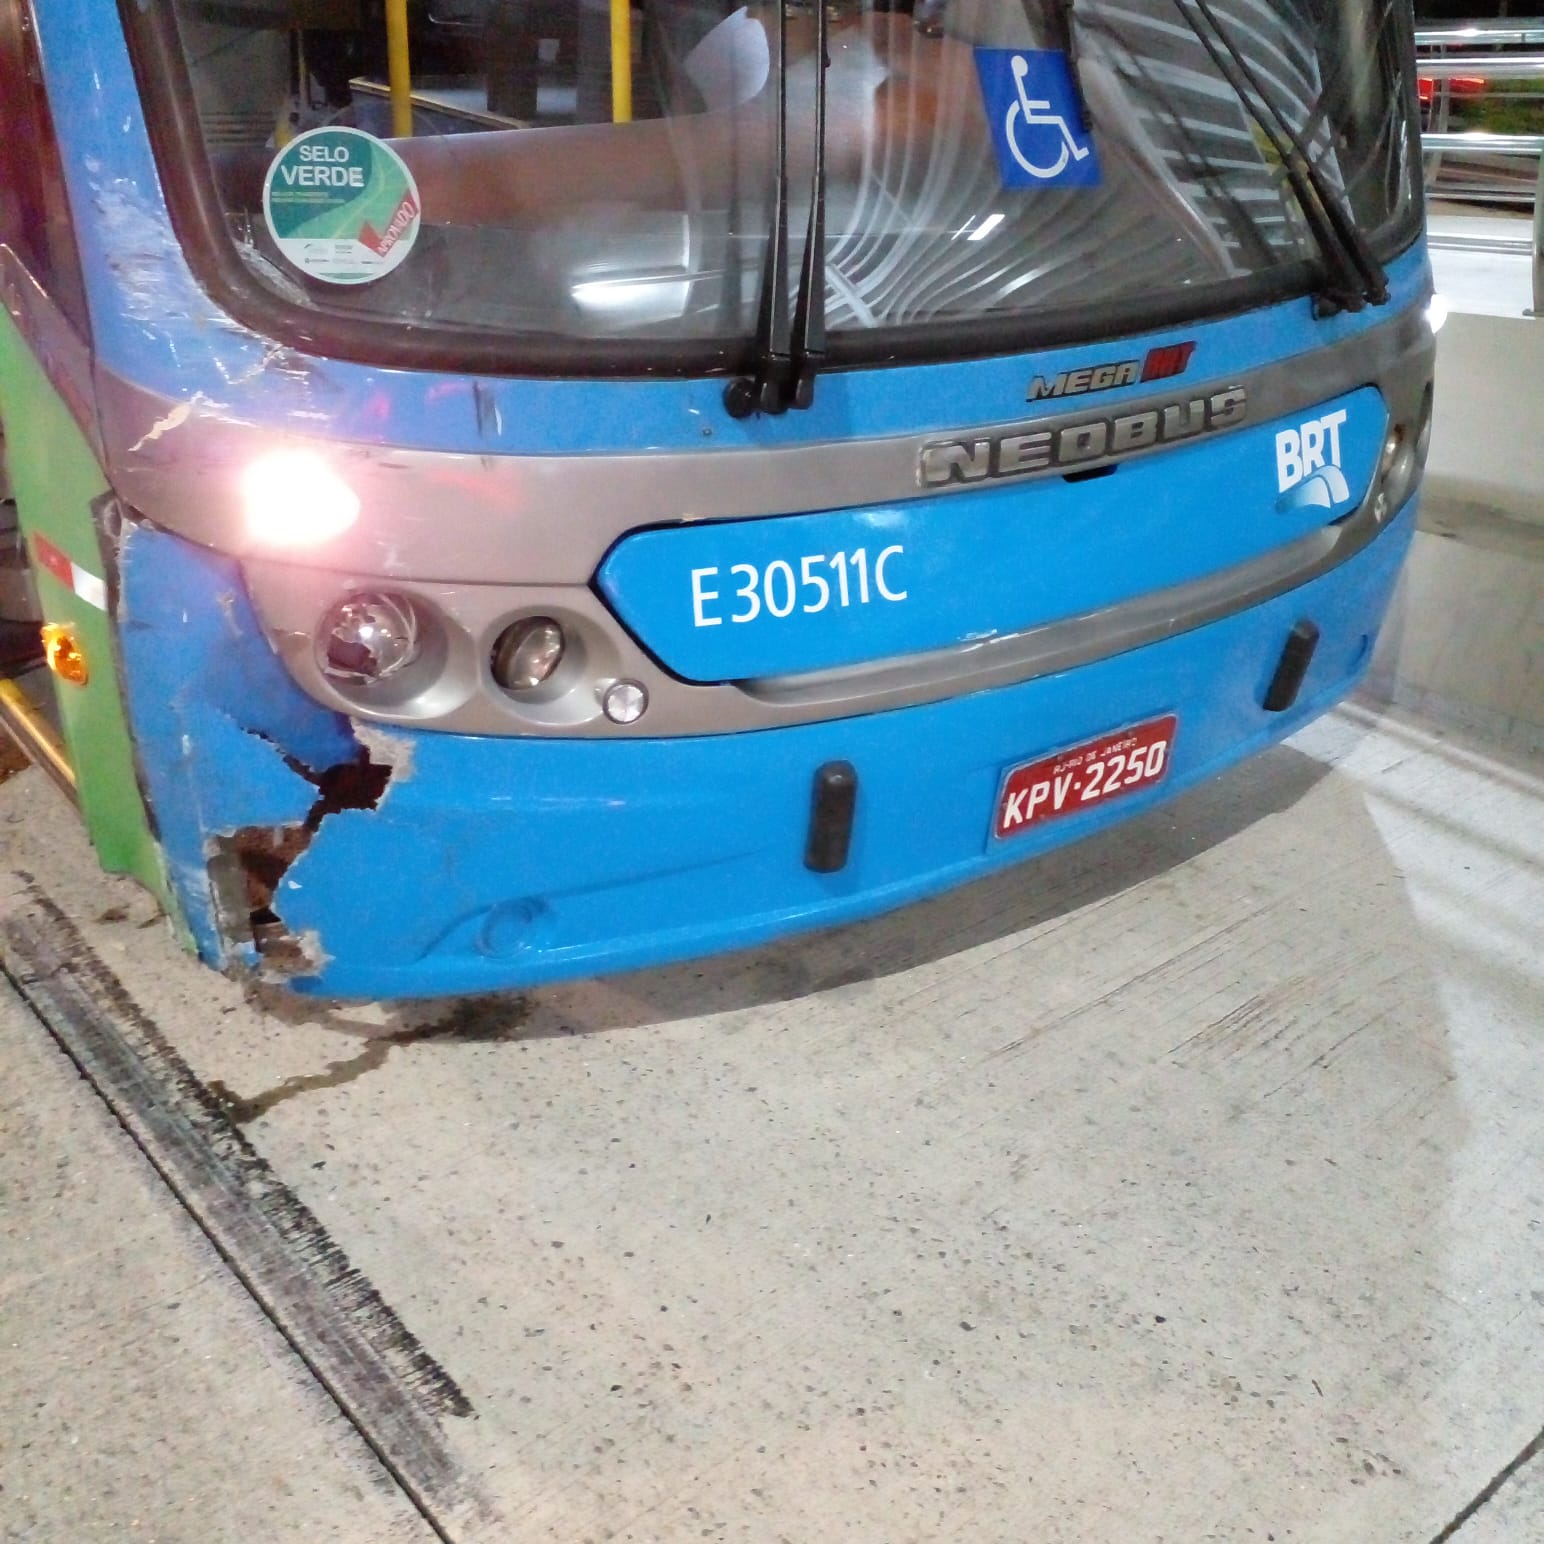 BRT danificado após acidente na Zona Oeste do Rio